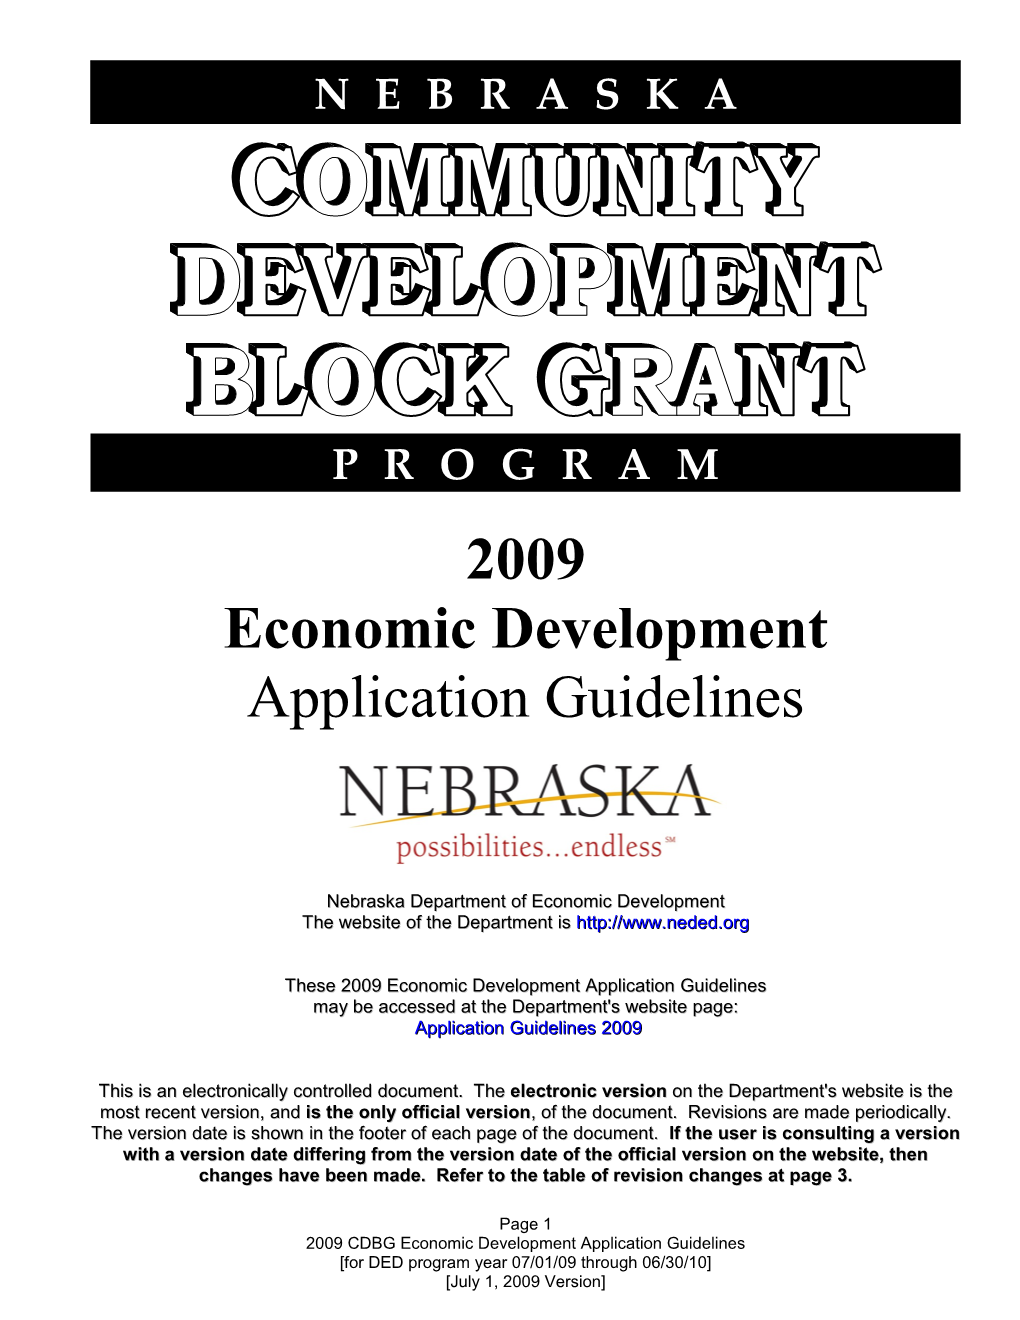 2009 Economic Development Application